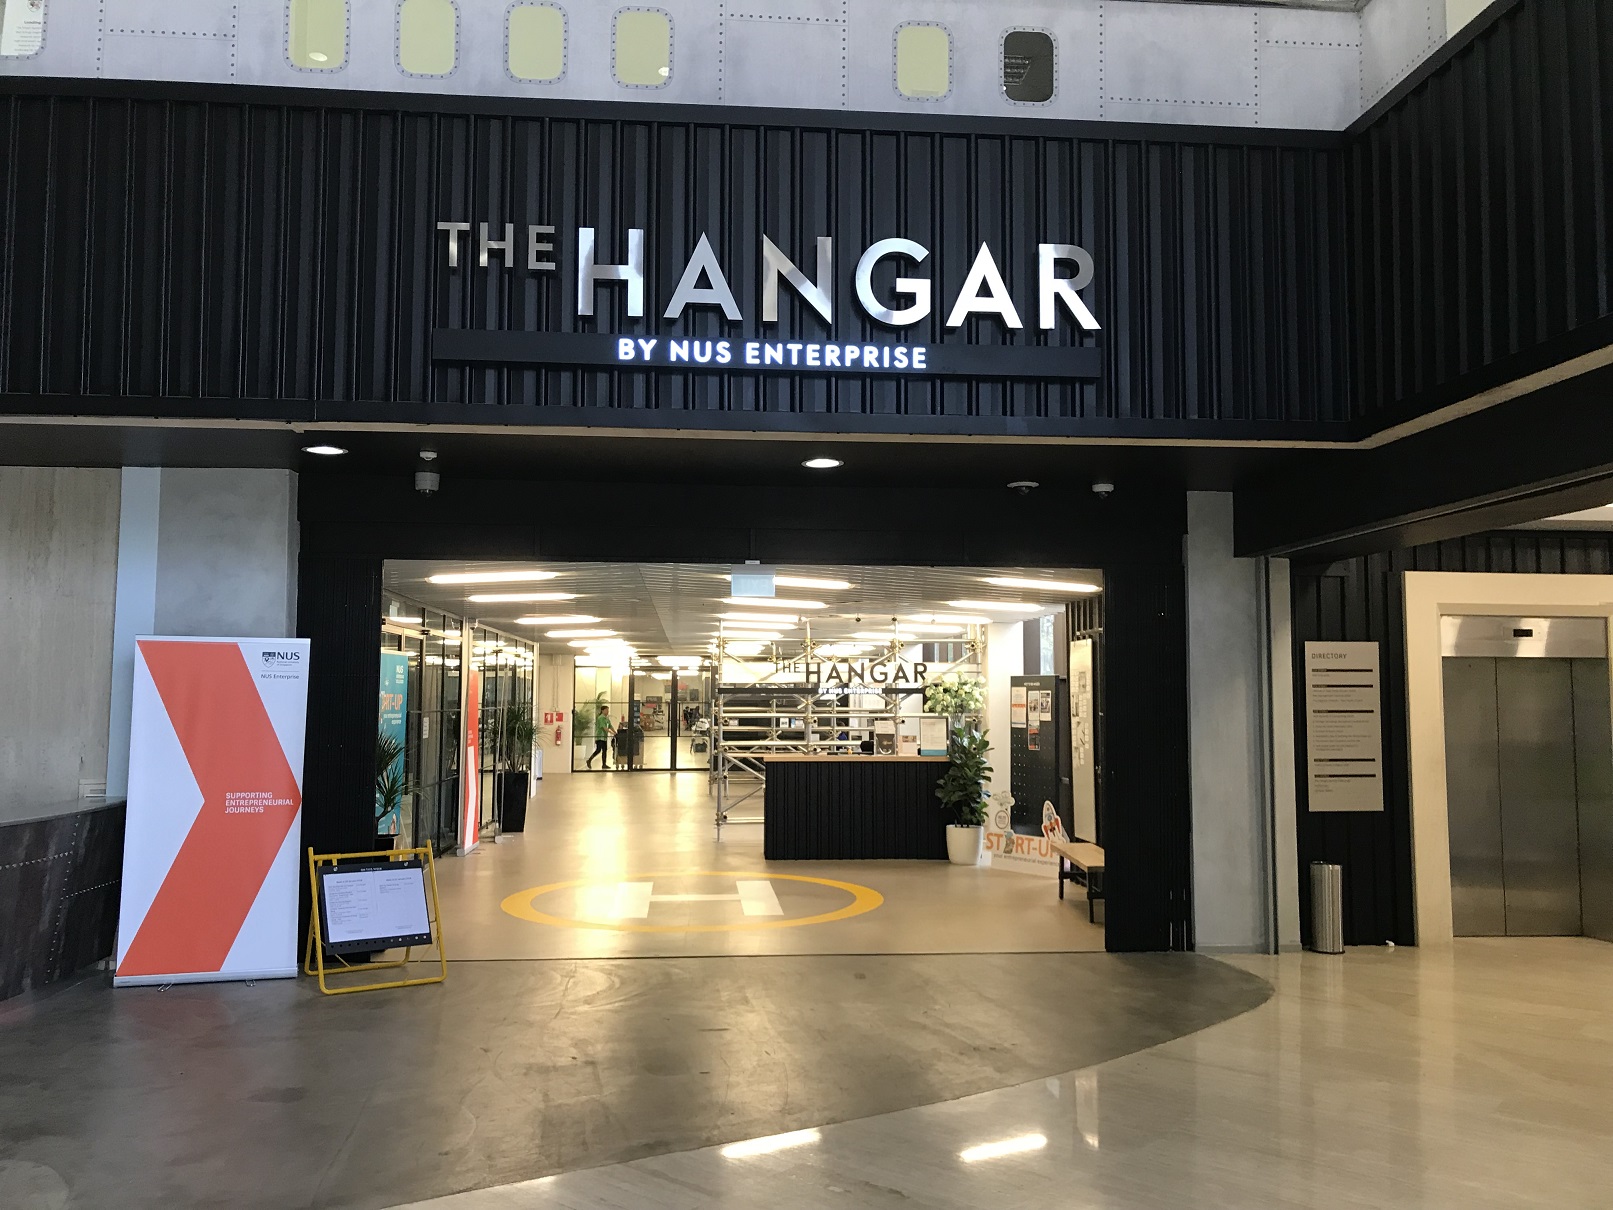 The Hangar seems cool!